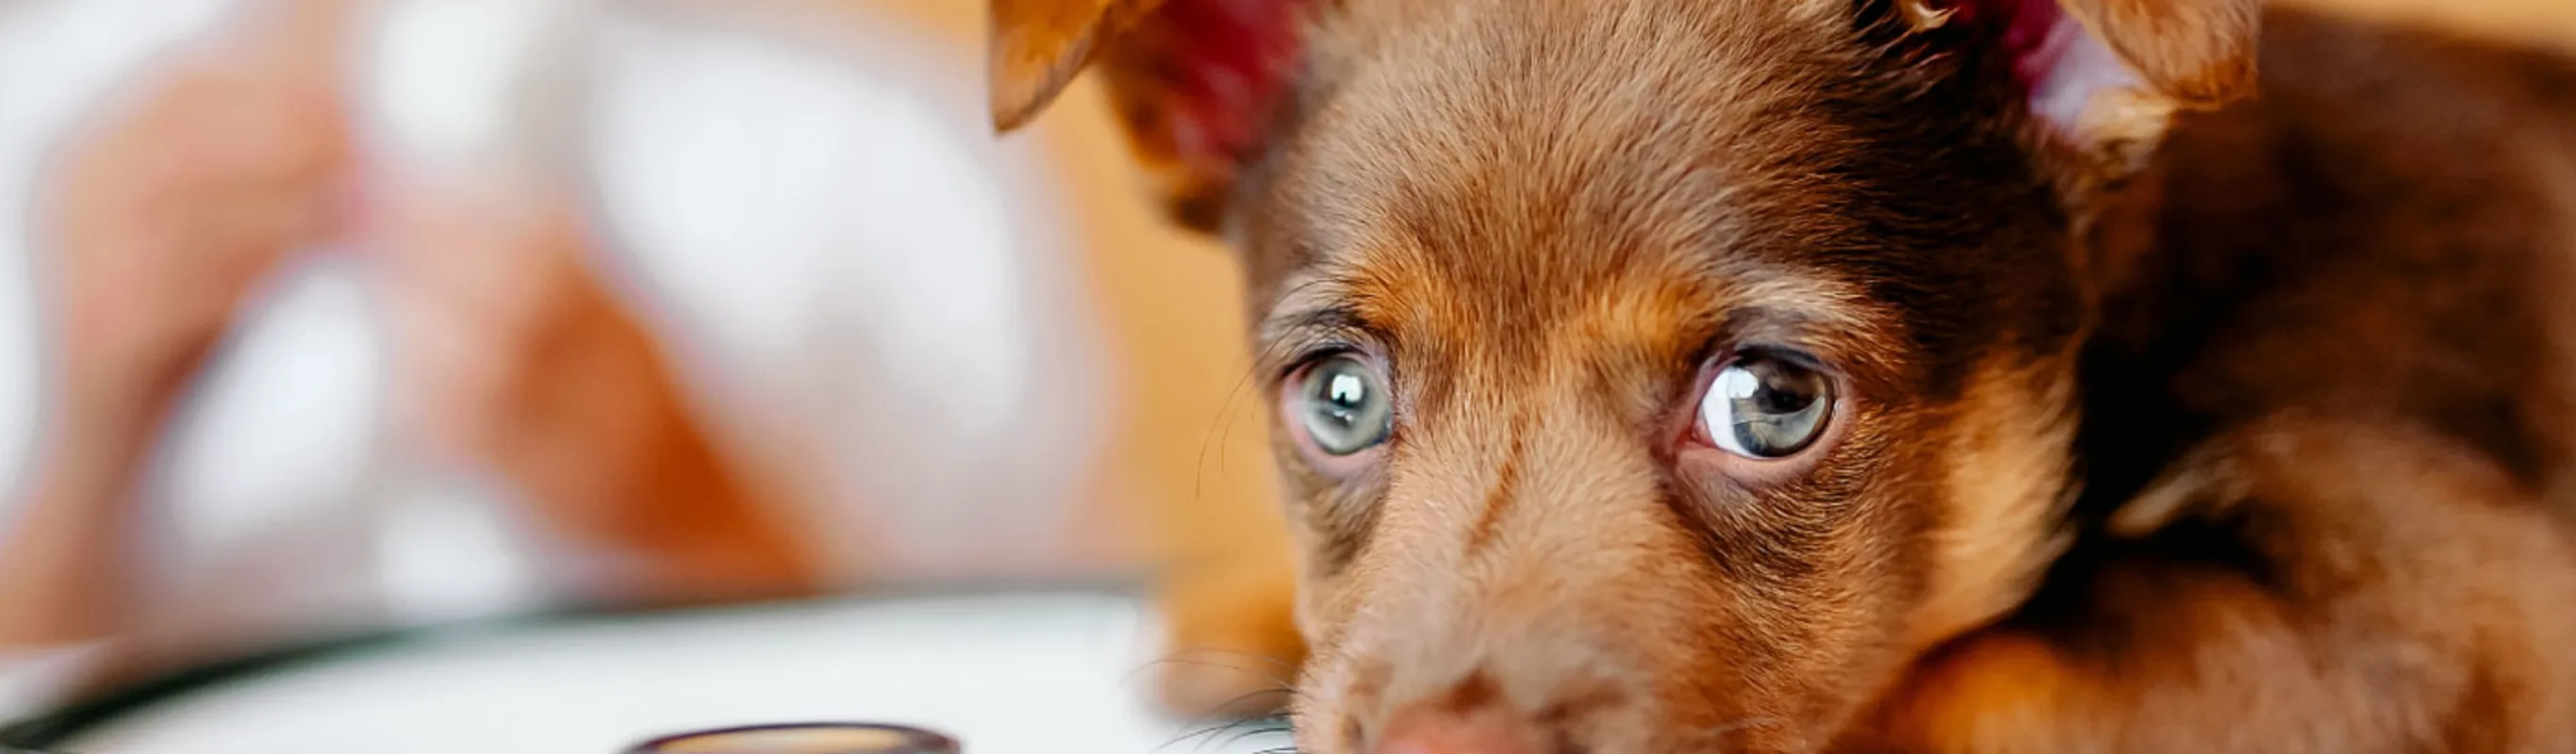 Big Brown Eyes Dog Puppy